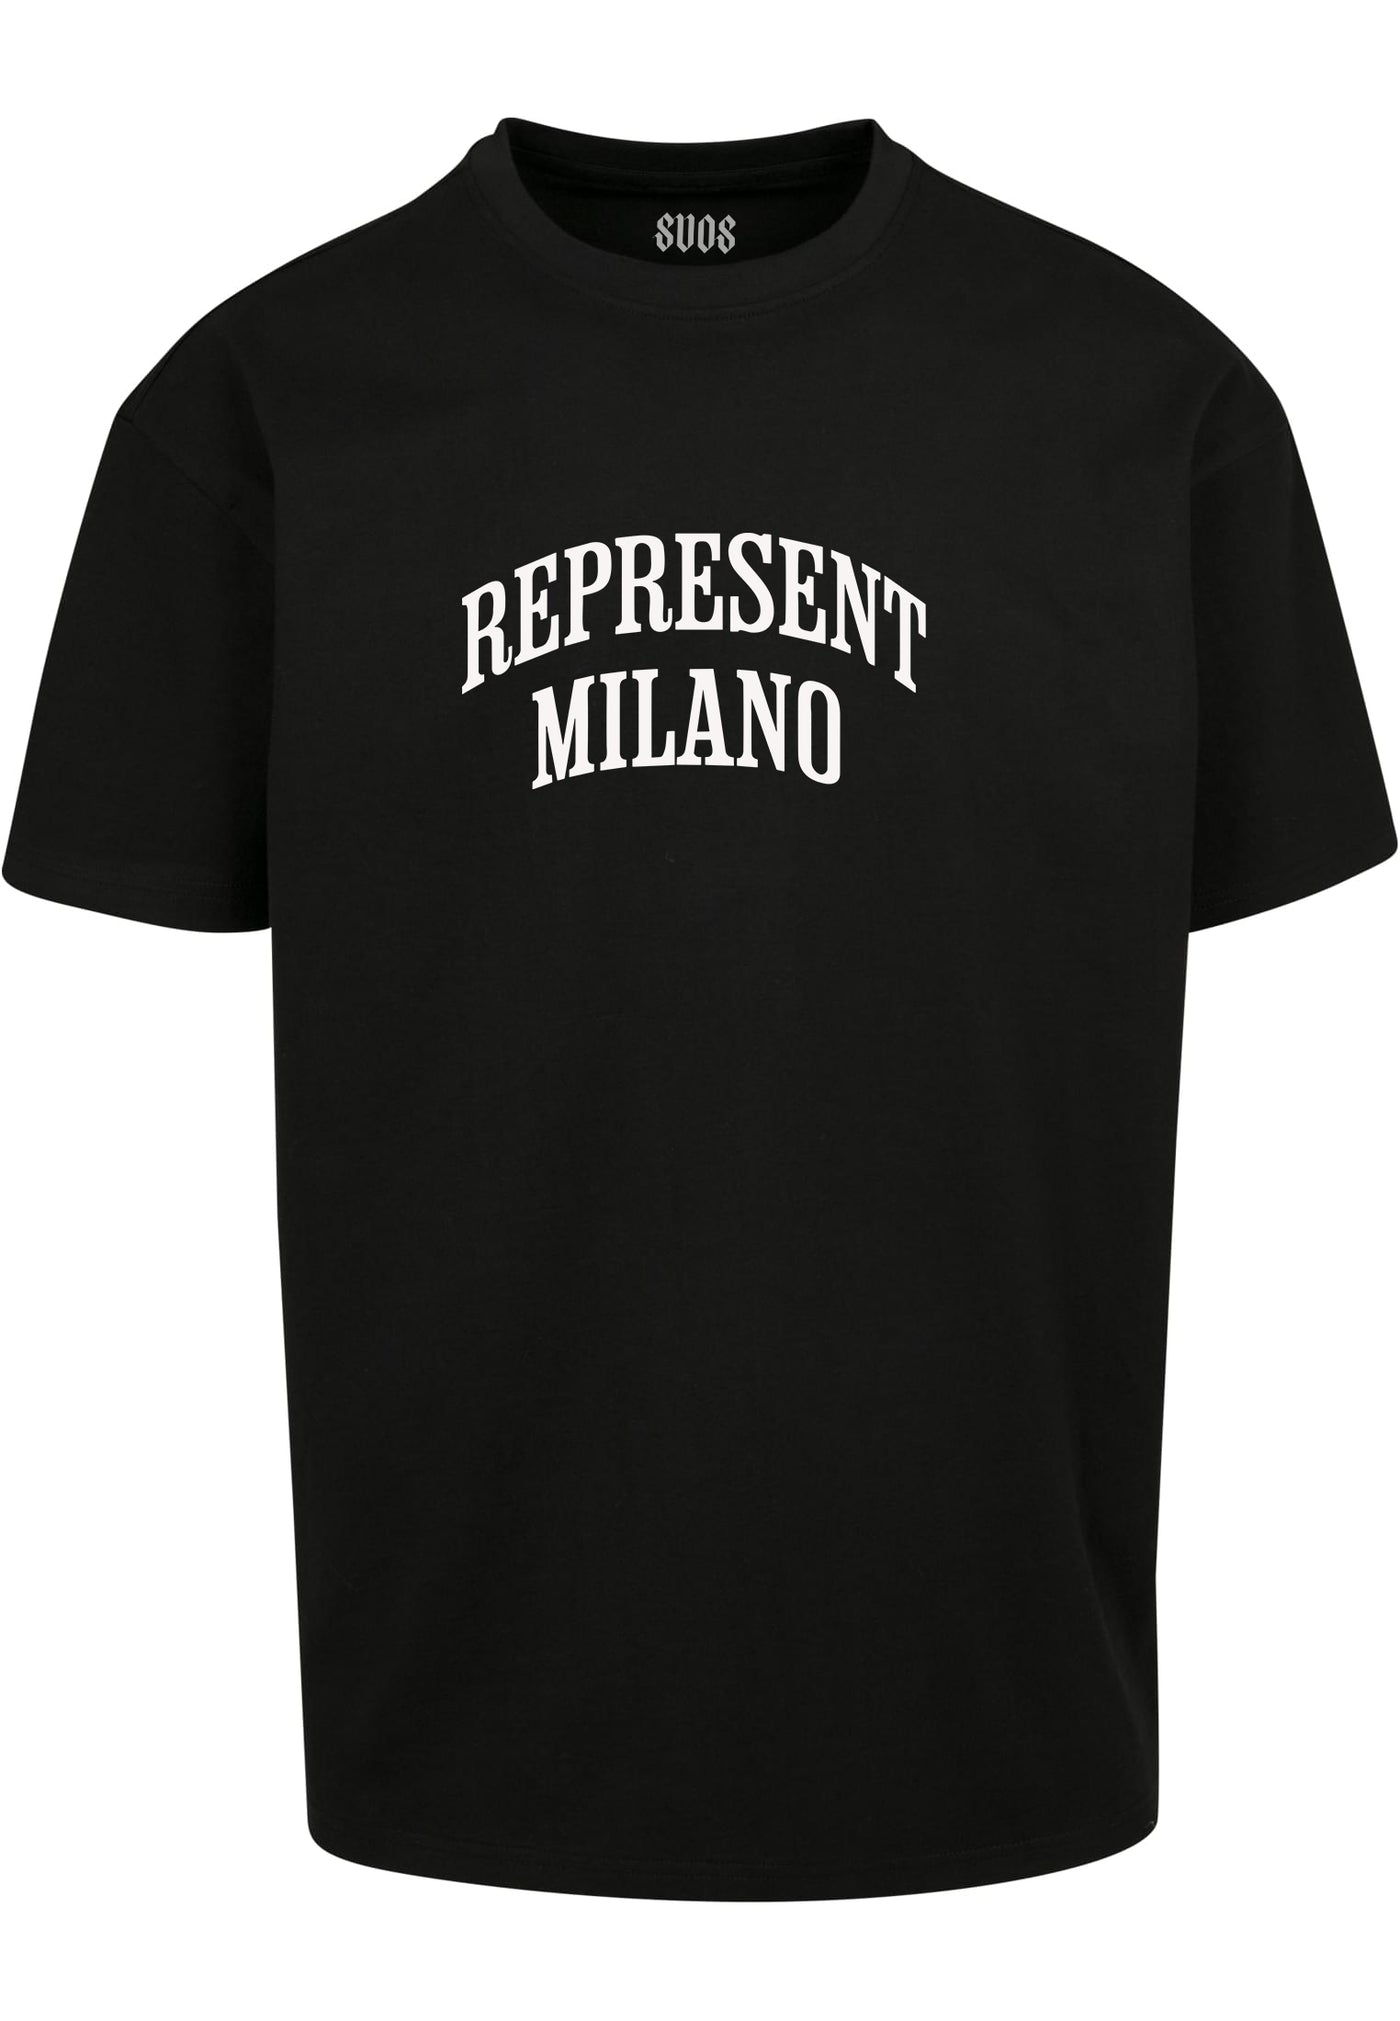 T Shirt Represent Milano